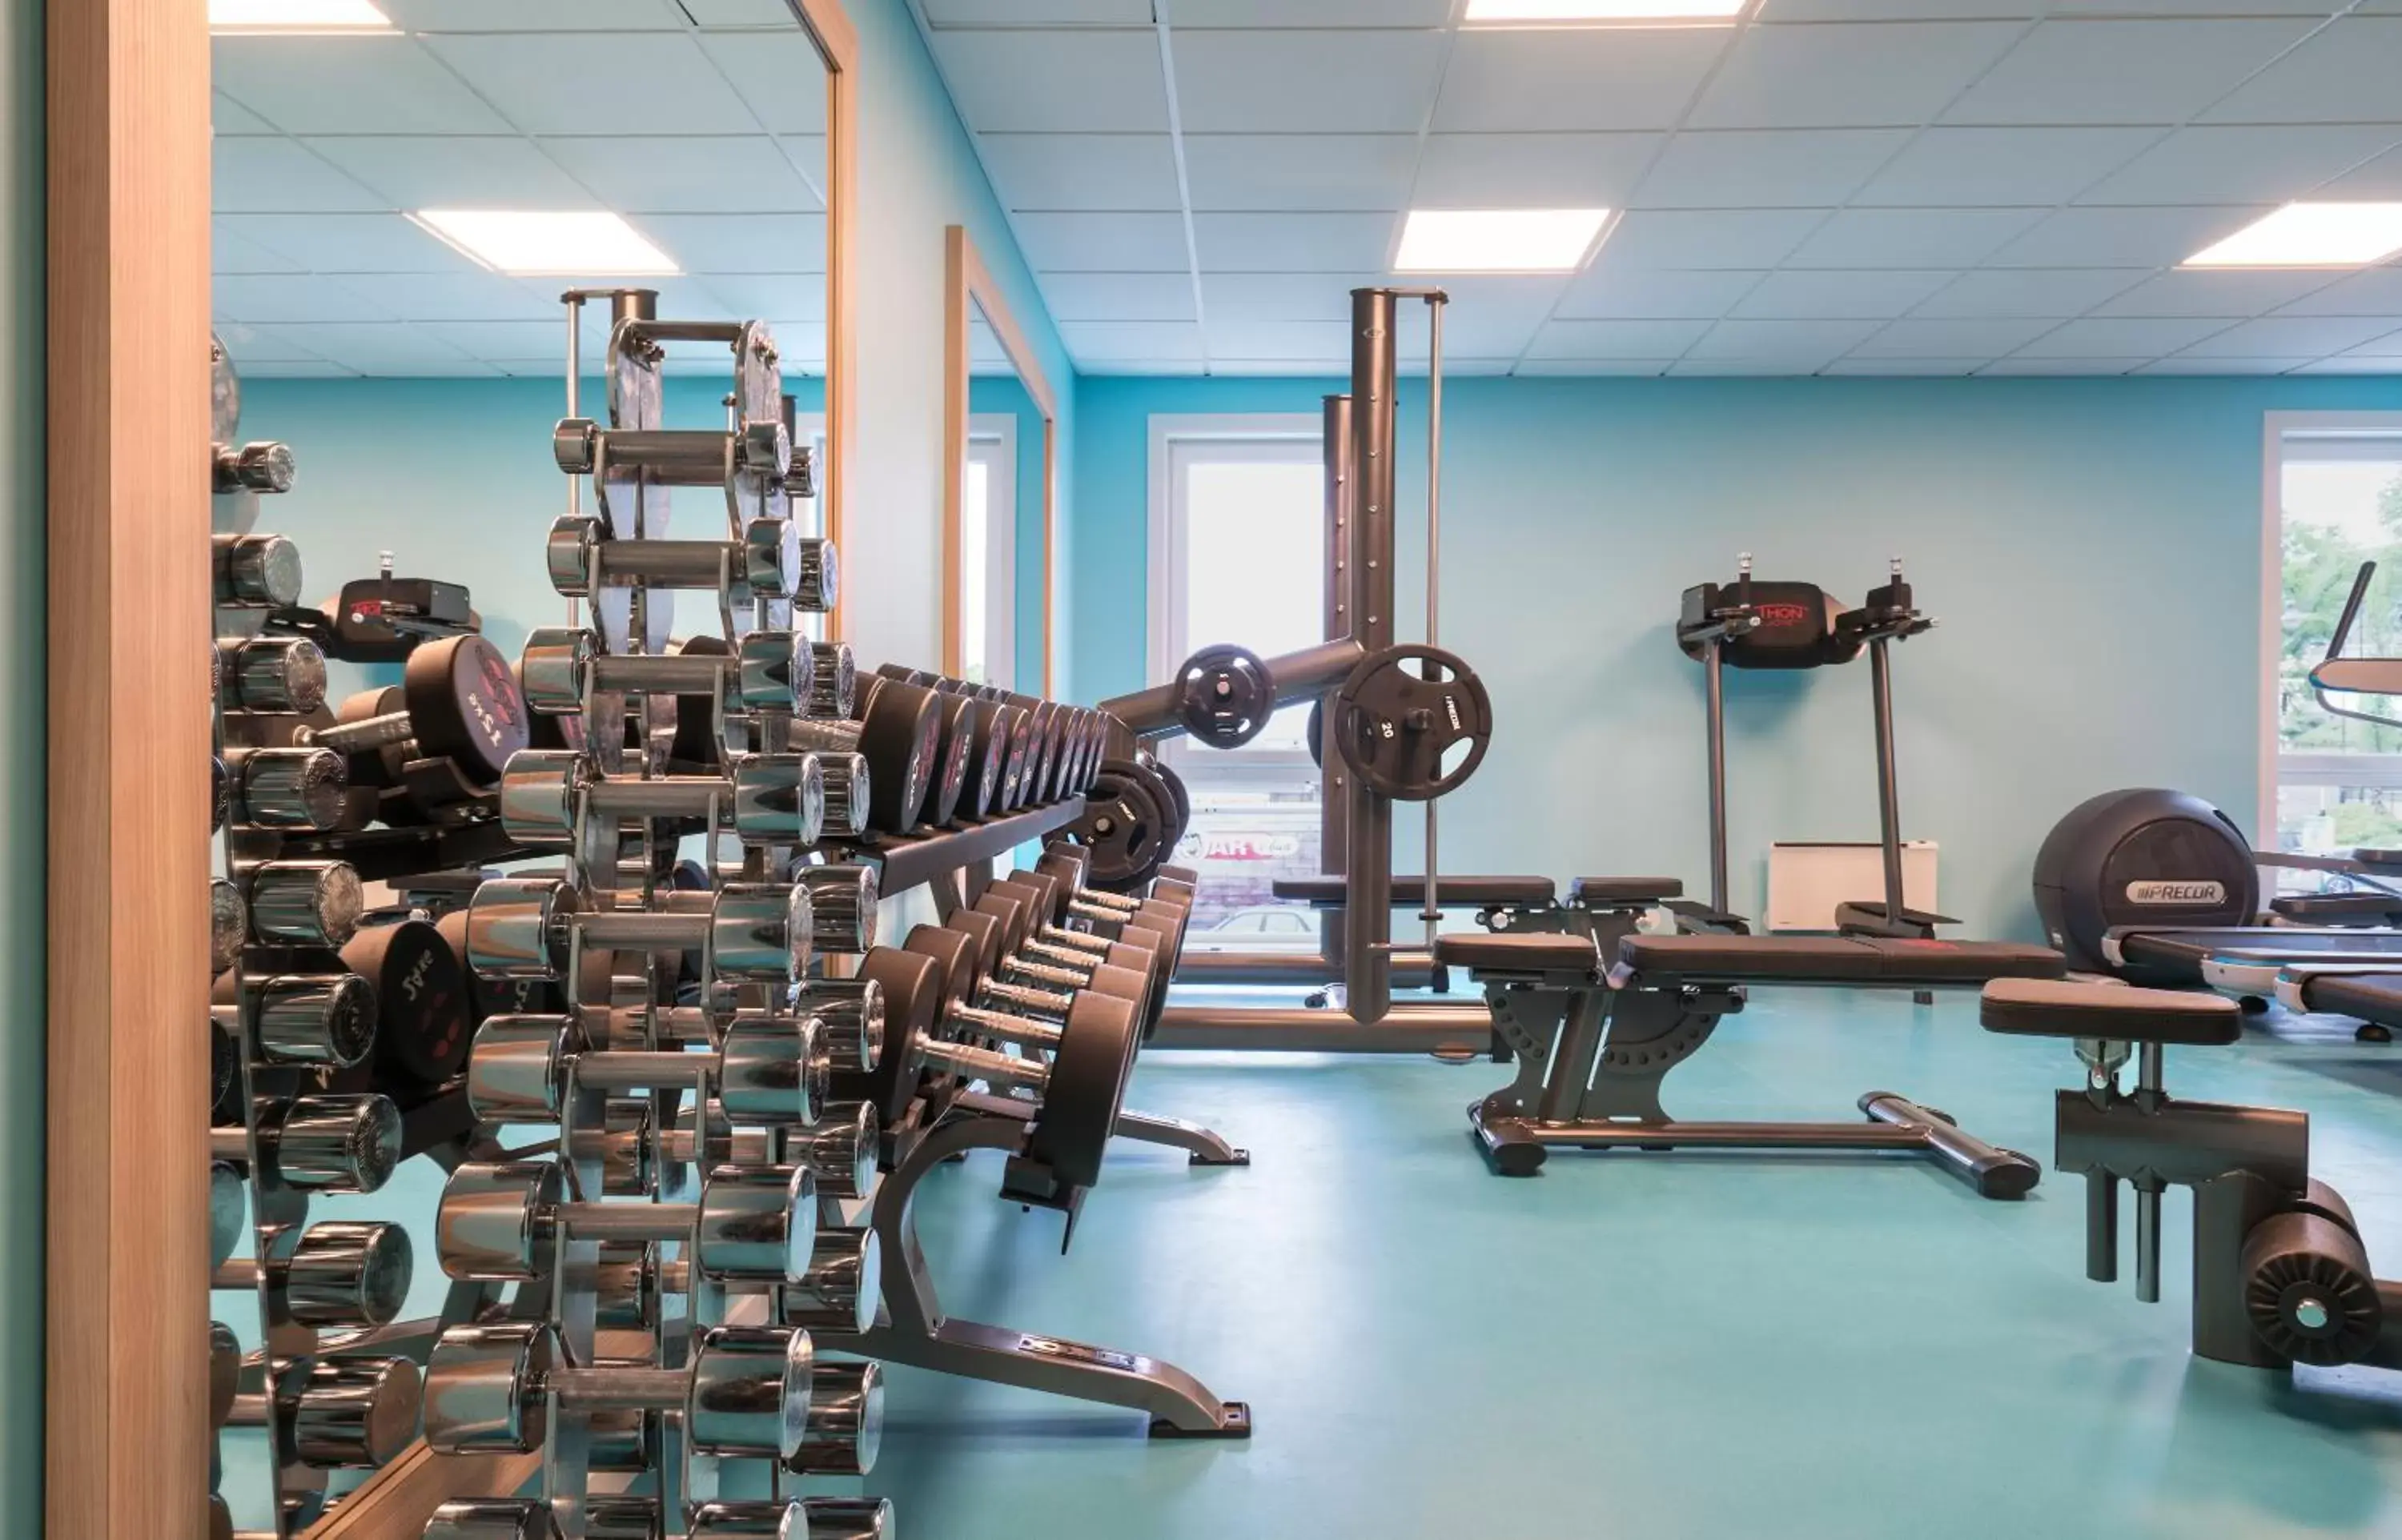 Fitness centre/facilities, Fitness Center/Facilities in Thon Hotel Tønsberg Brygge